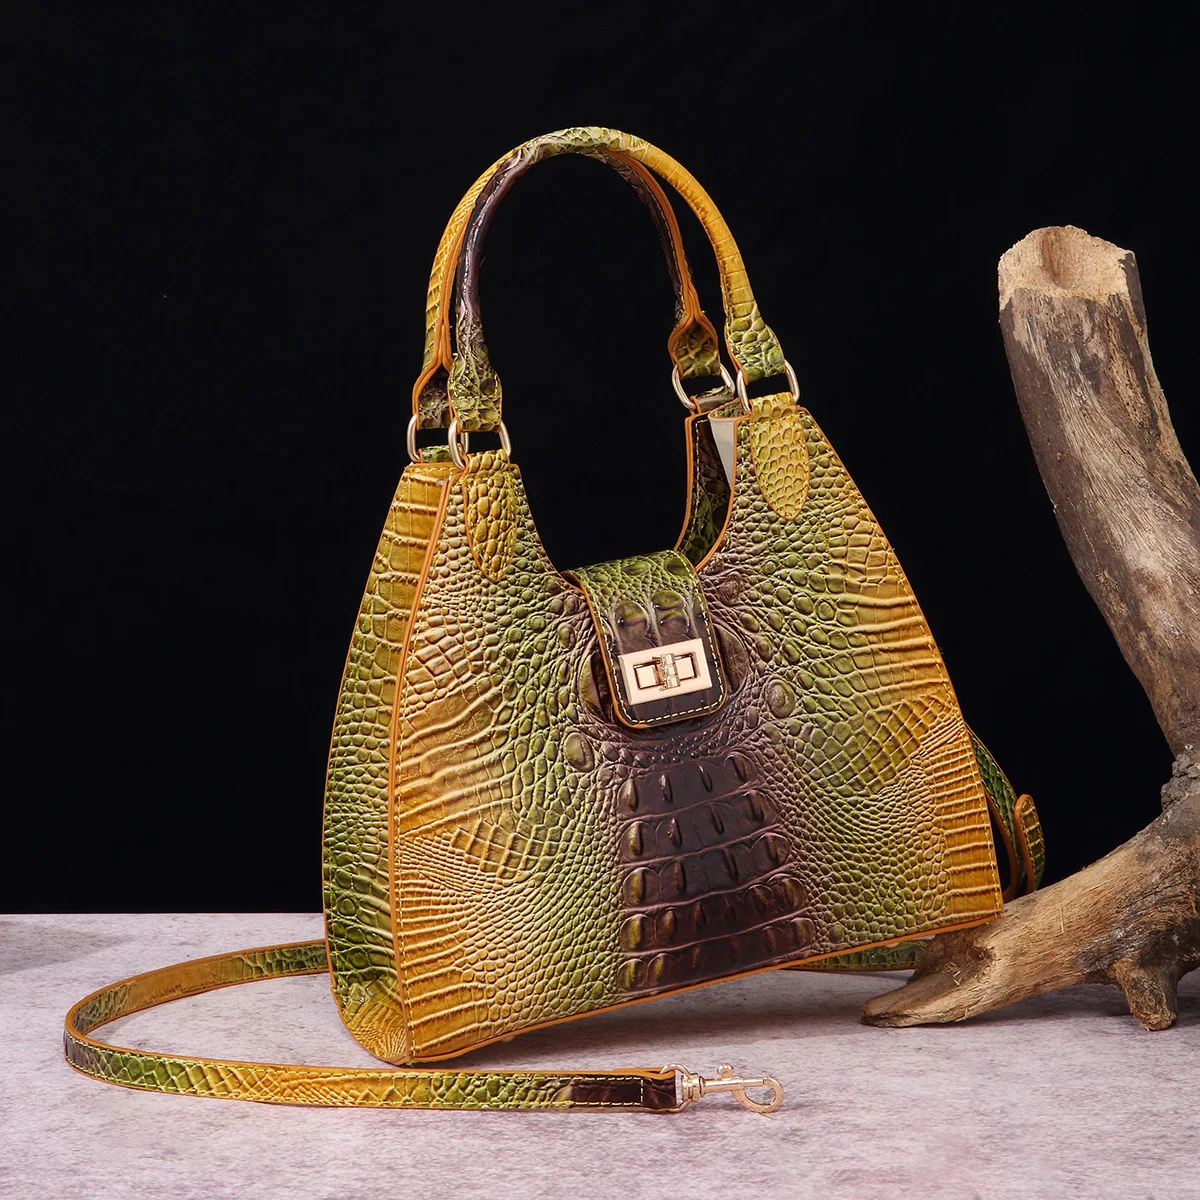 

Fashion Exquisite Shopping Bag Retro Casual Women Totes Shoulder Bags Female Leather crocodile pattern Handbag for Women